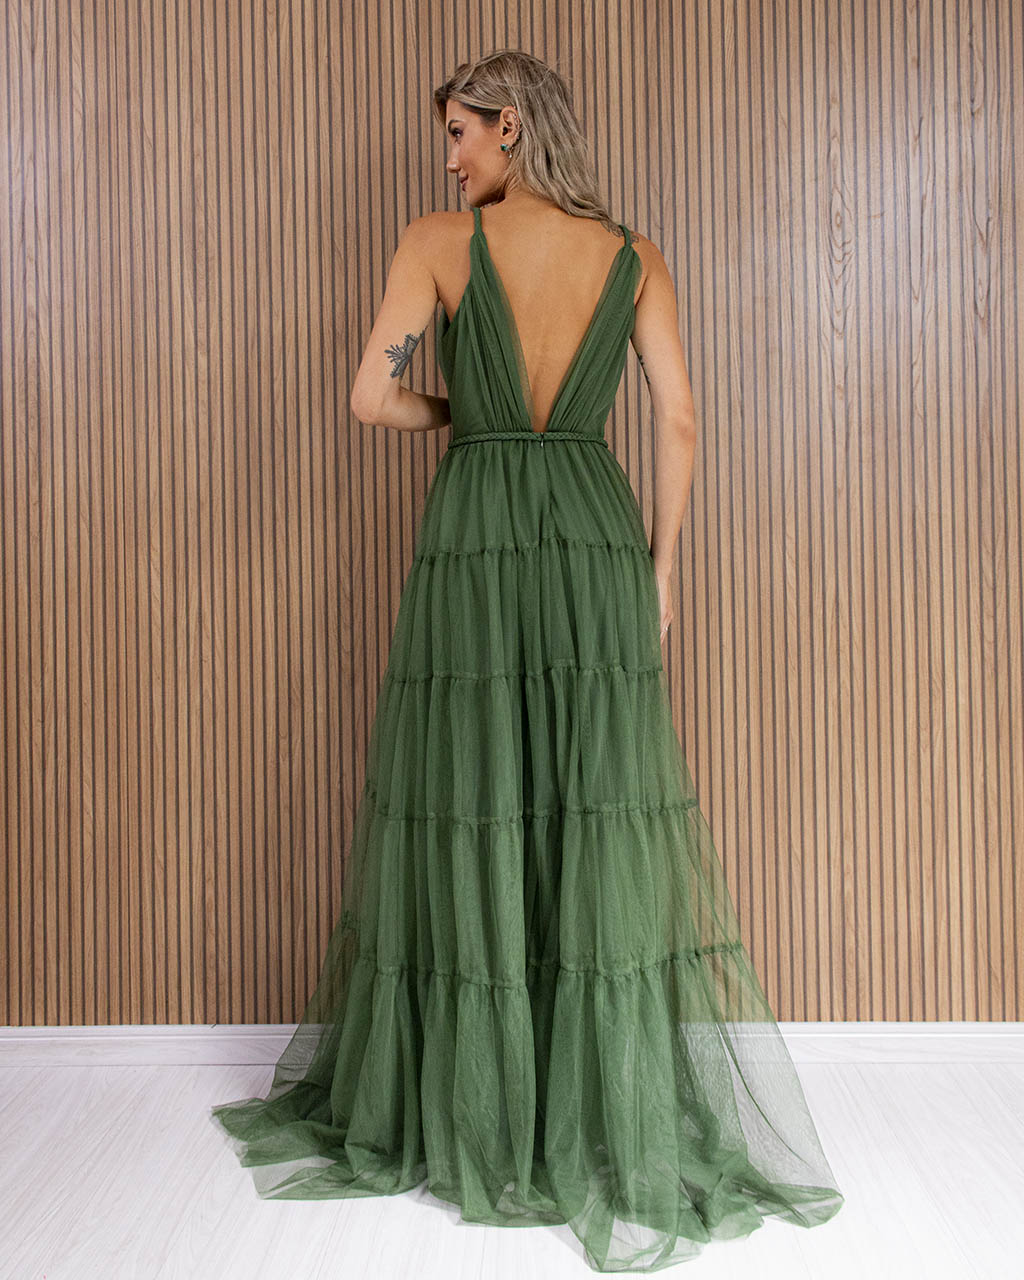 Vestido Longo Verde Oliva em Tule Raquel  - Empório NM